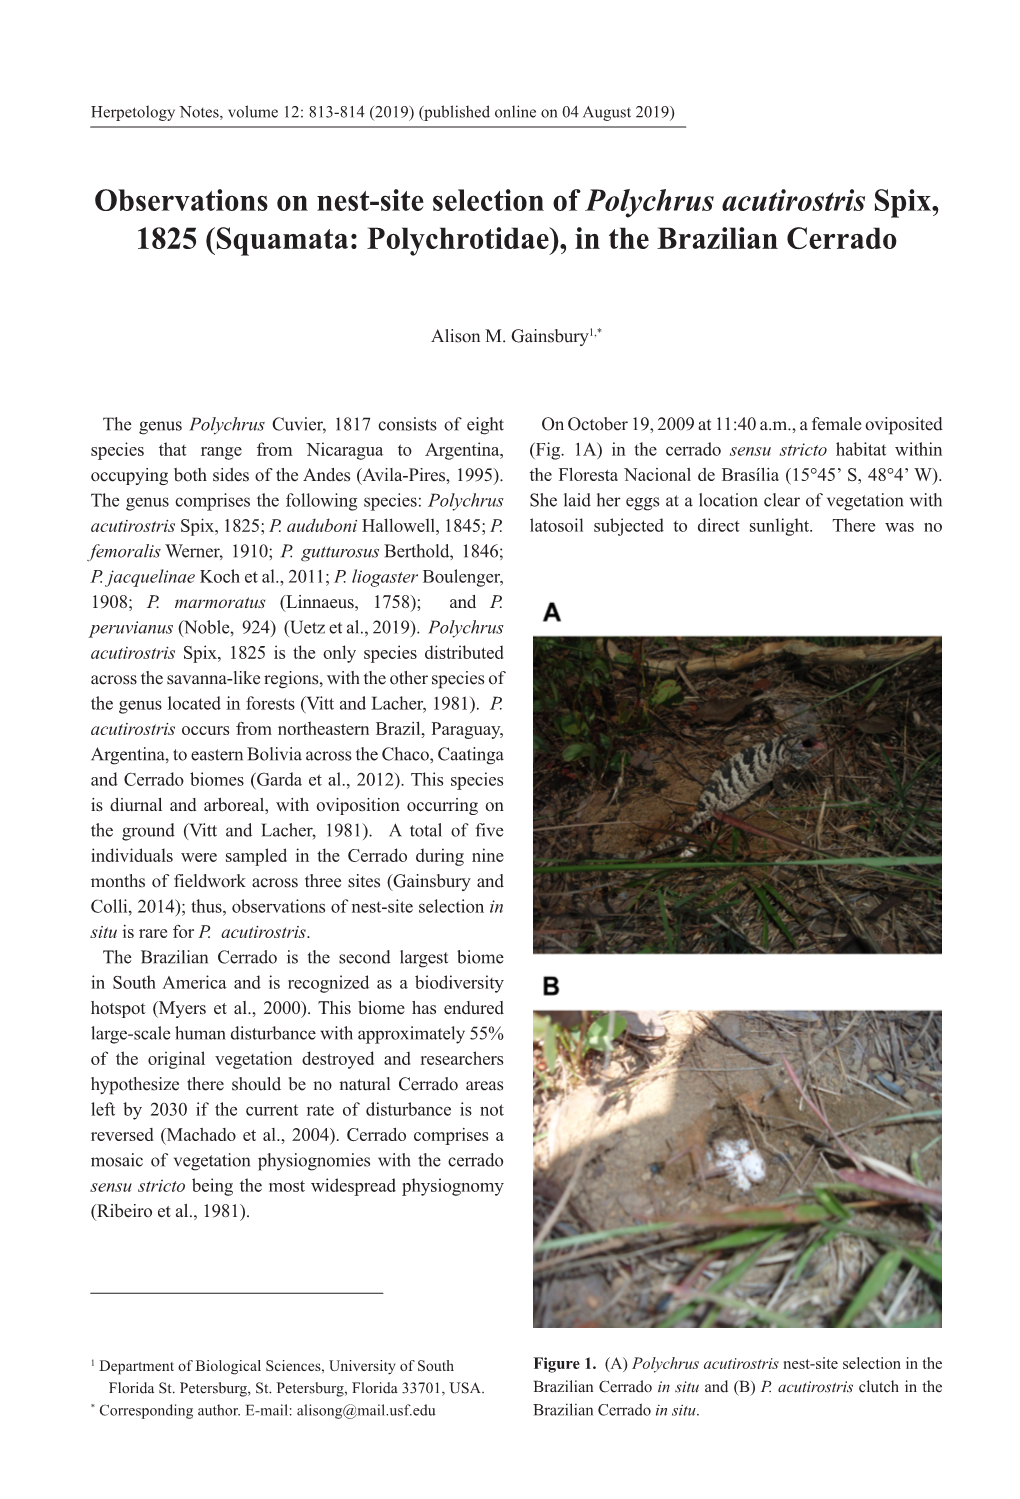 Observations on Nest-Site Selection of Polychrus Acutirostris Spix, 1825 (Squamata: Polychrotidae), in the Brazilian Cerrado